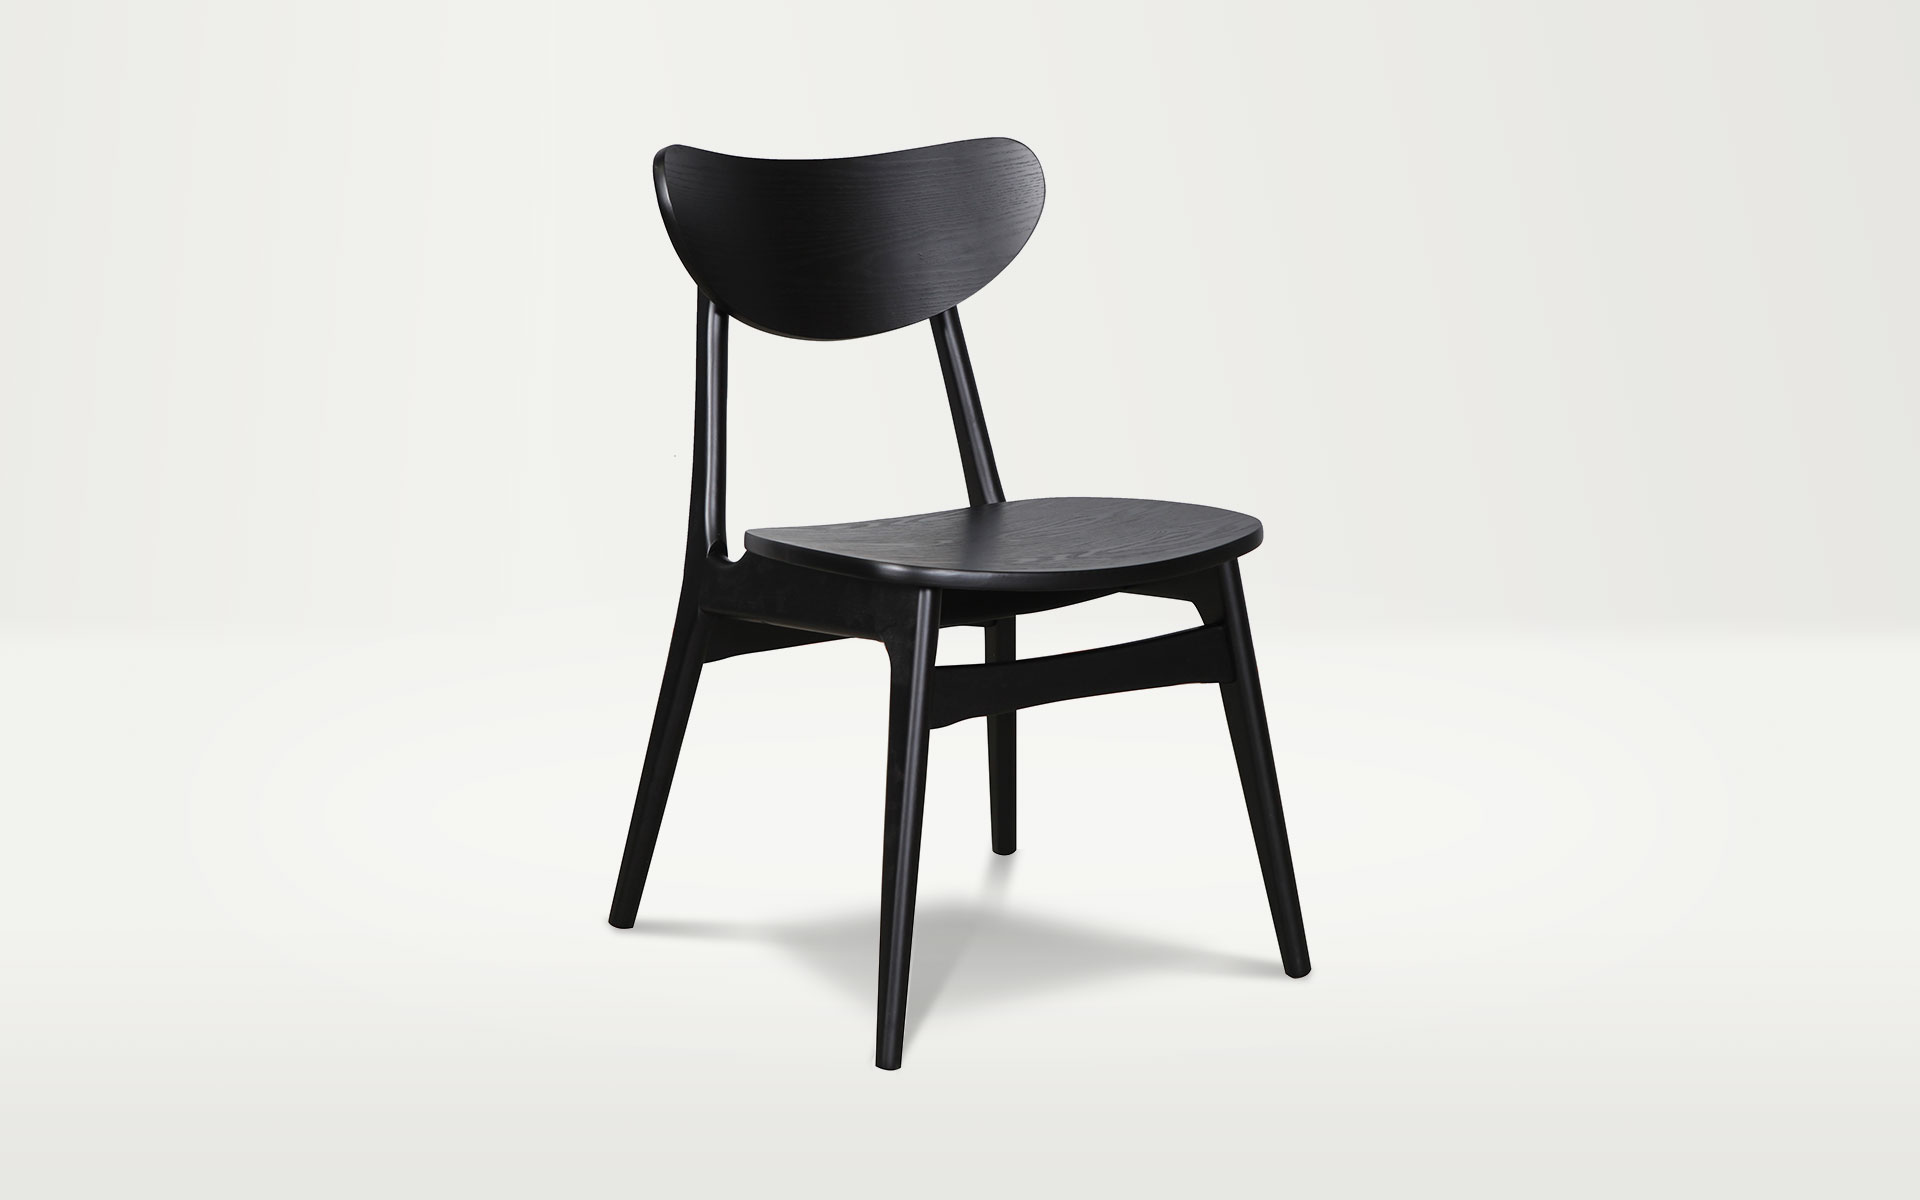 02 Finland Chair Black - Finland Dining Chair - Black